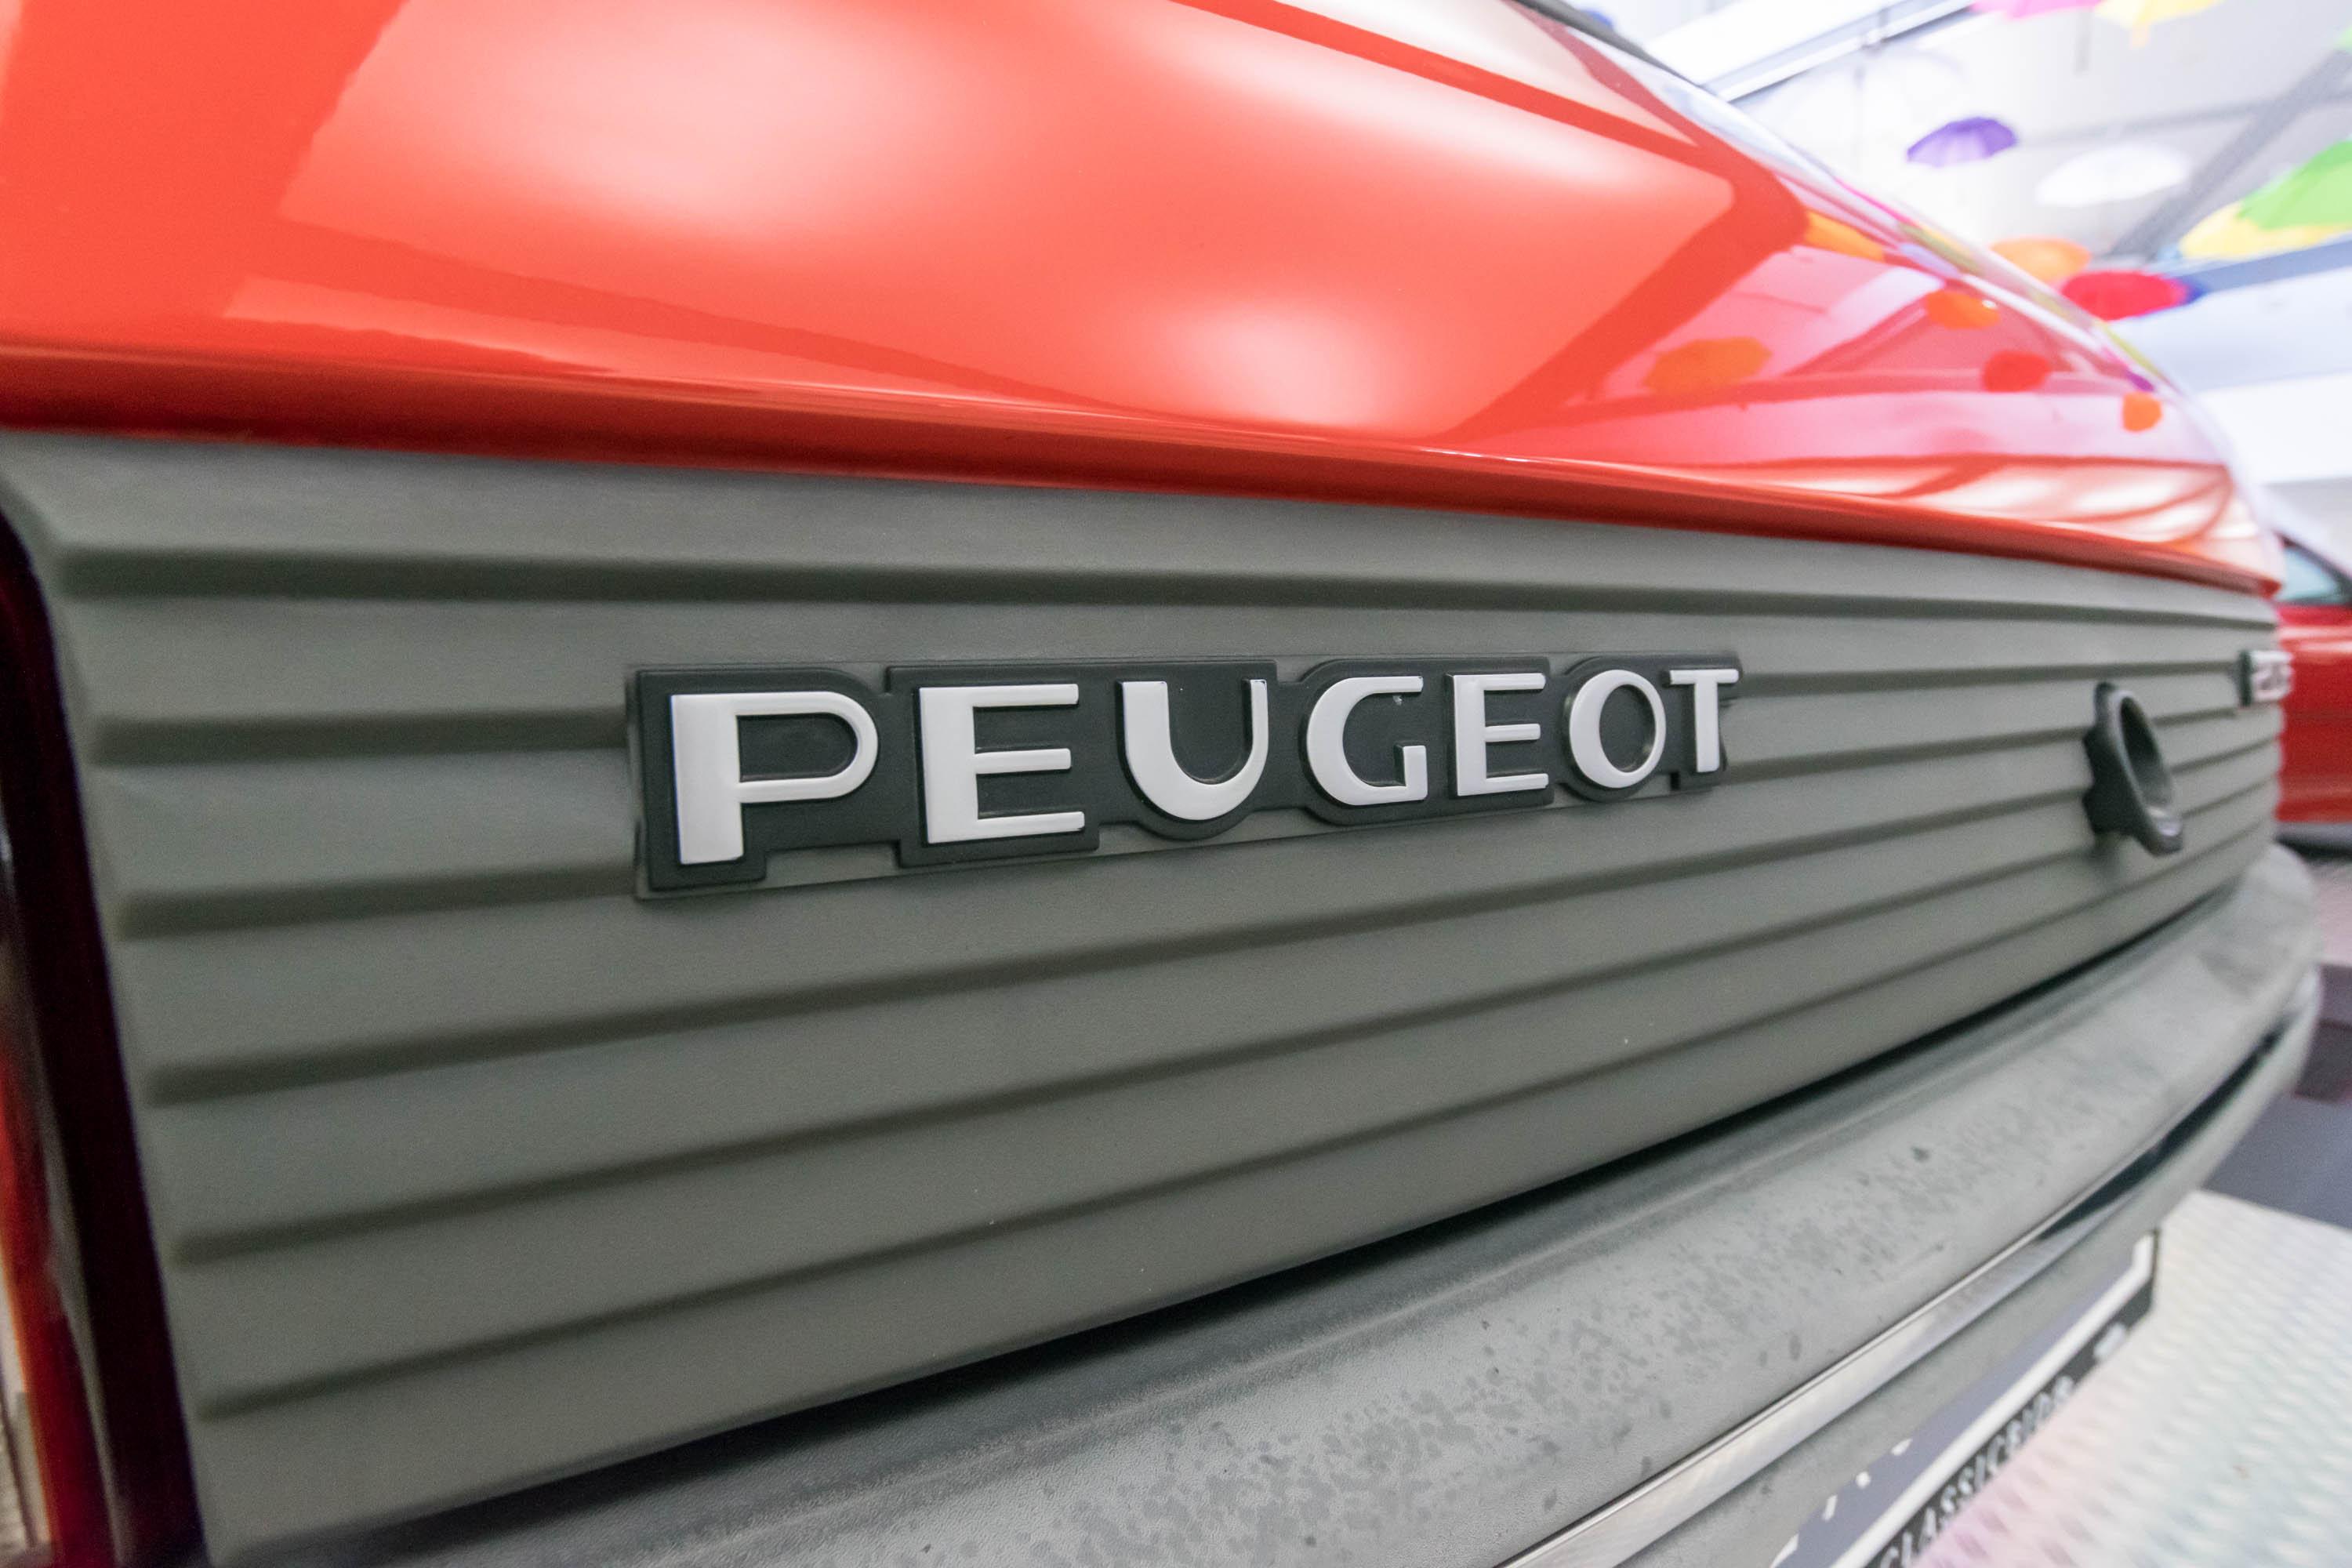 1987 Peugeot 205 CT Convertible